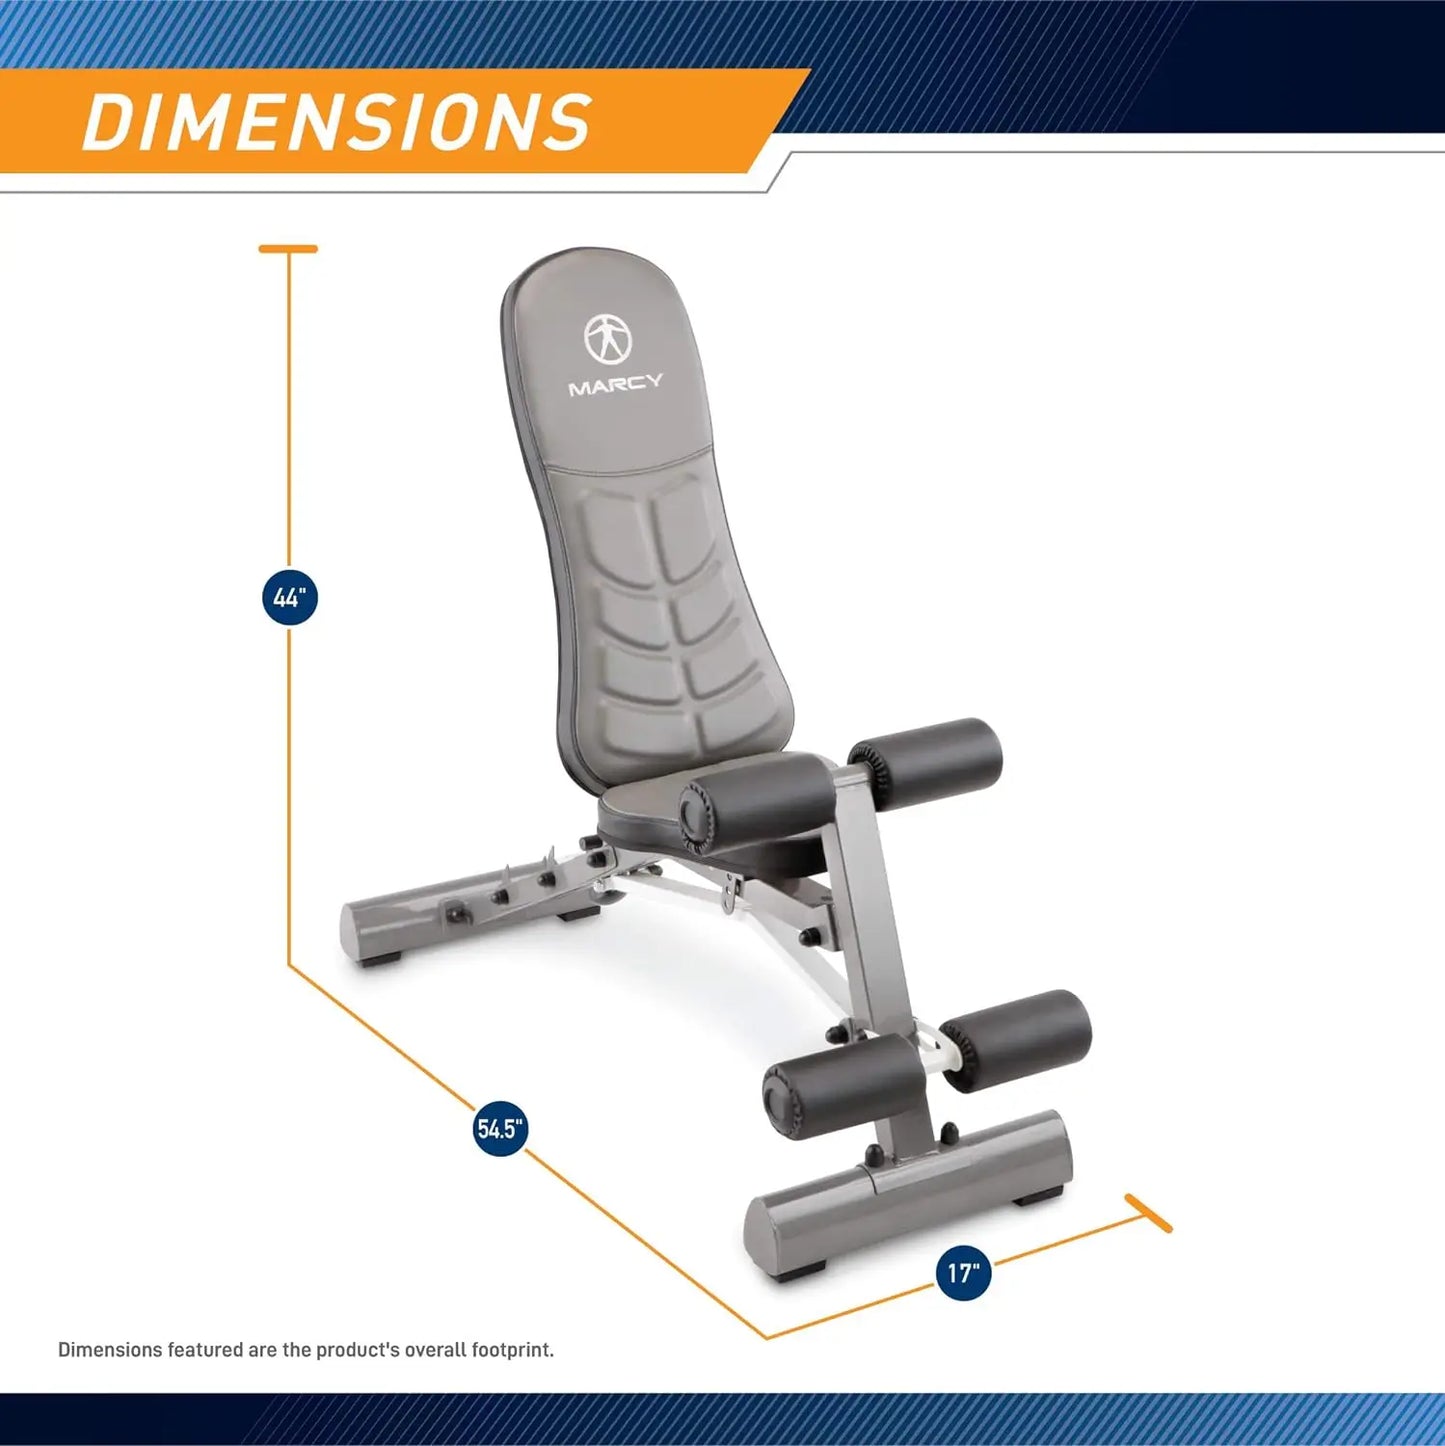 Foldable Utility Bench Gym Equipment - SB-10100 , Black Weights gym equipment Workout bench Fitness Foldable workout bench